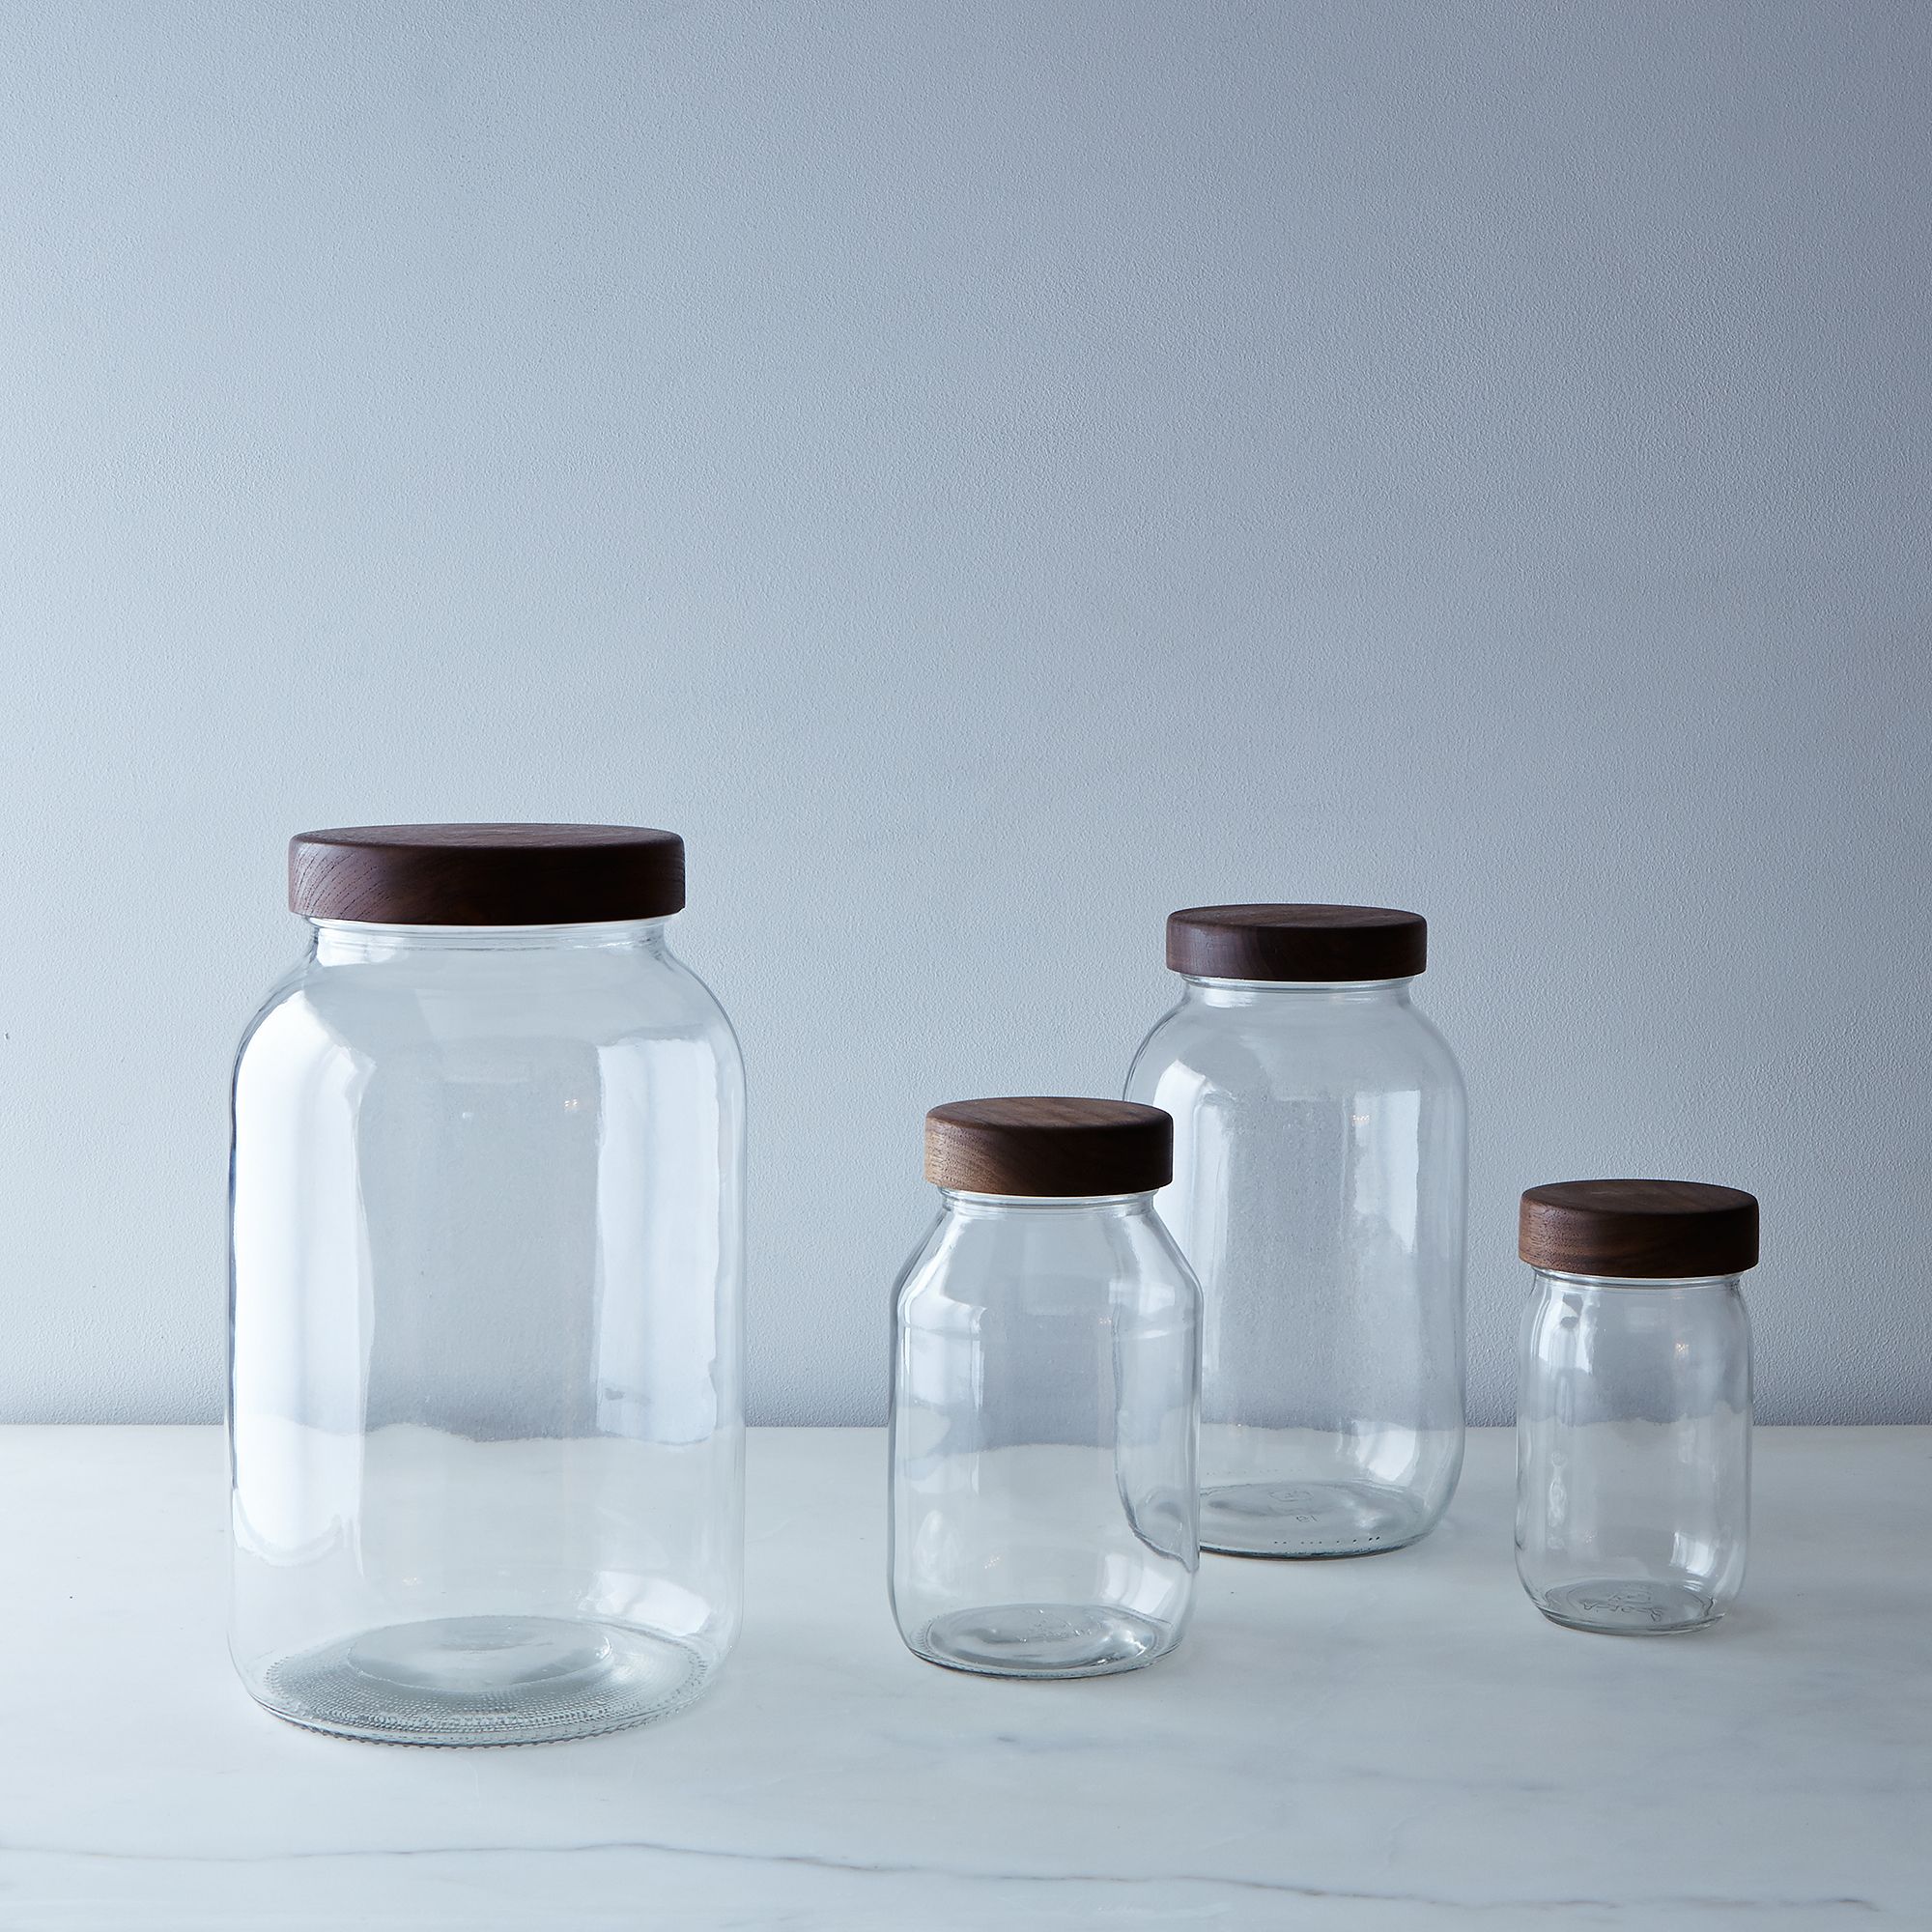 recycled food jars turned storage jars with glass knob tops